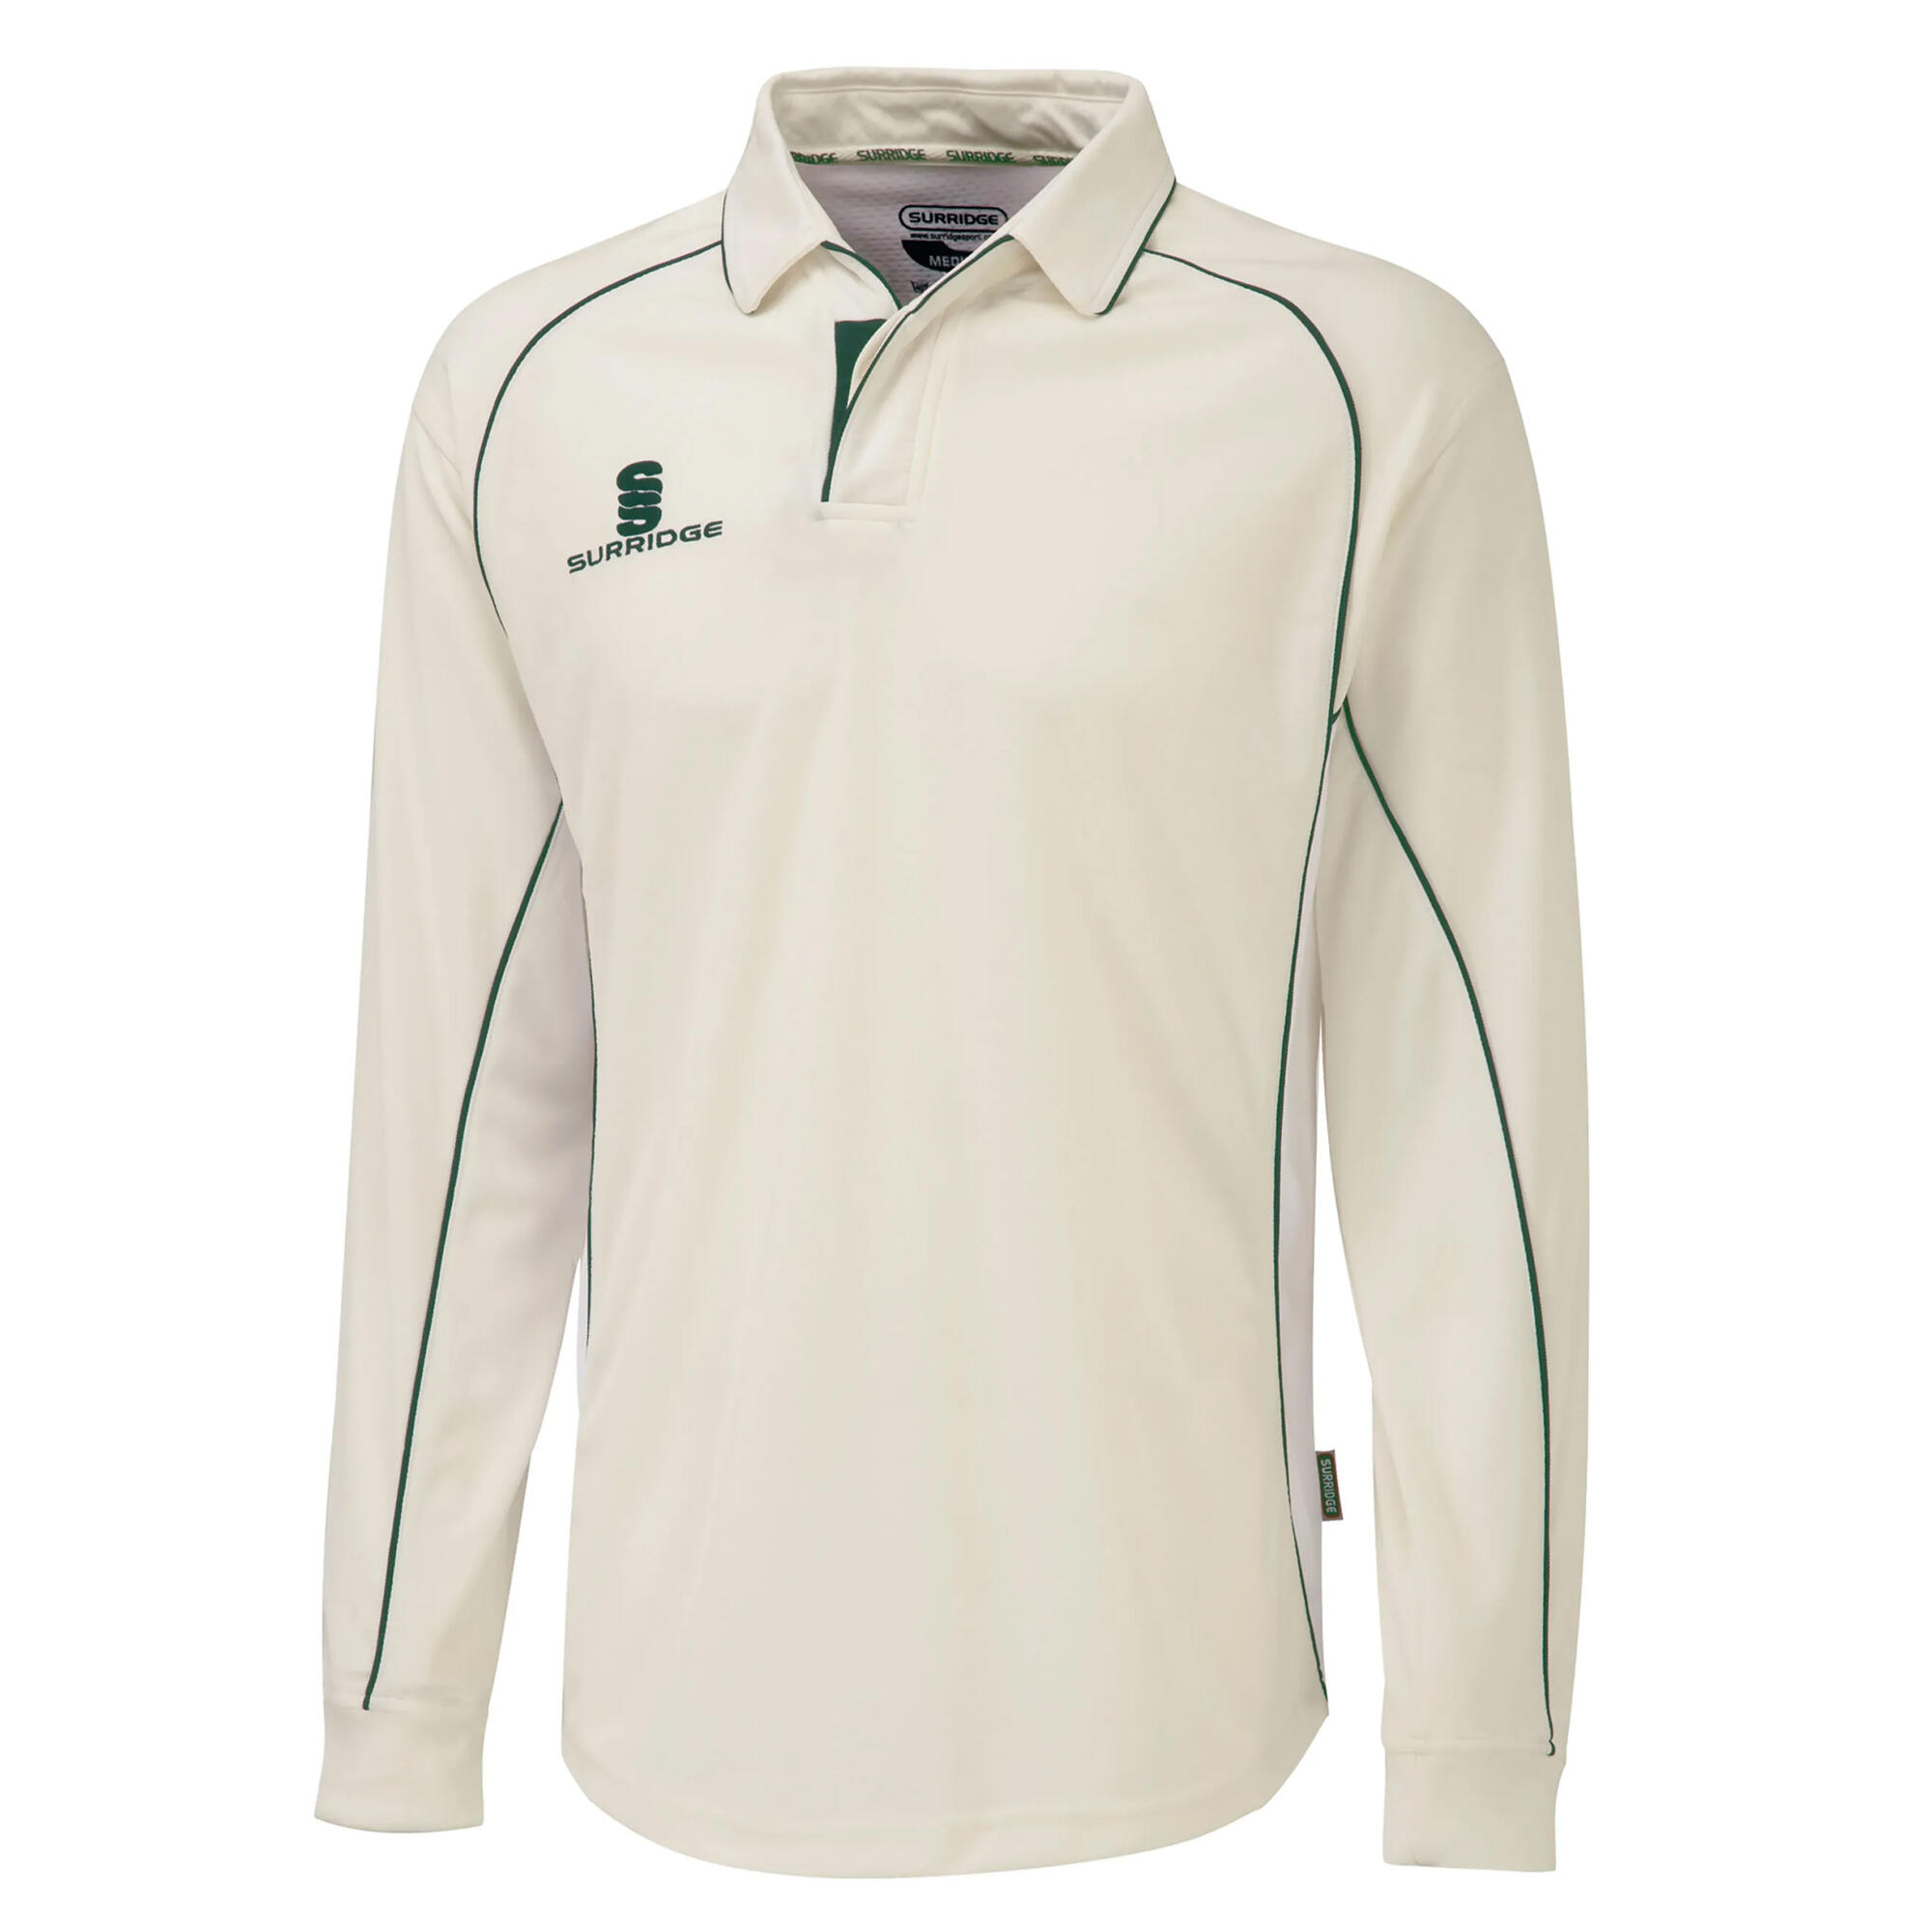 Mens/Youth Premier Sports Long Sleeve Polo Shirt (Cream/Green) 1/3